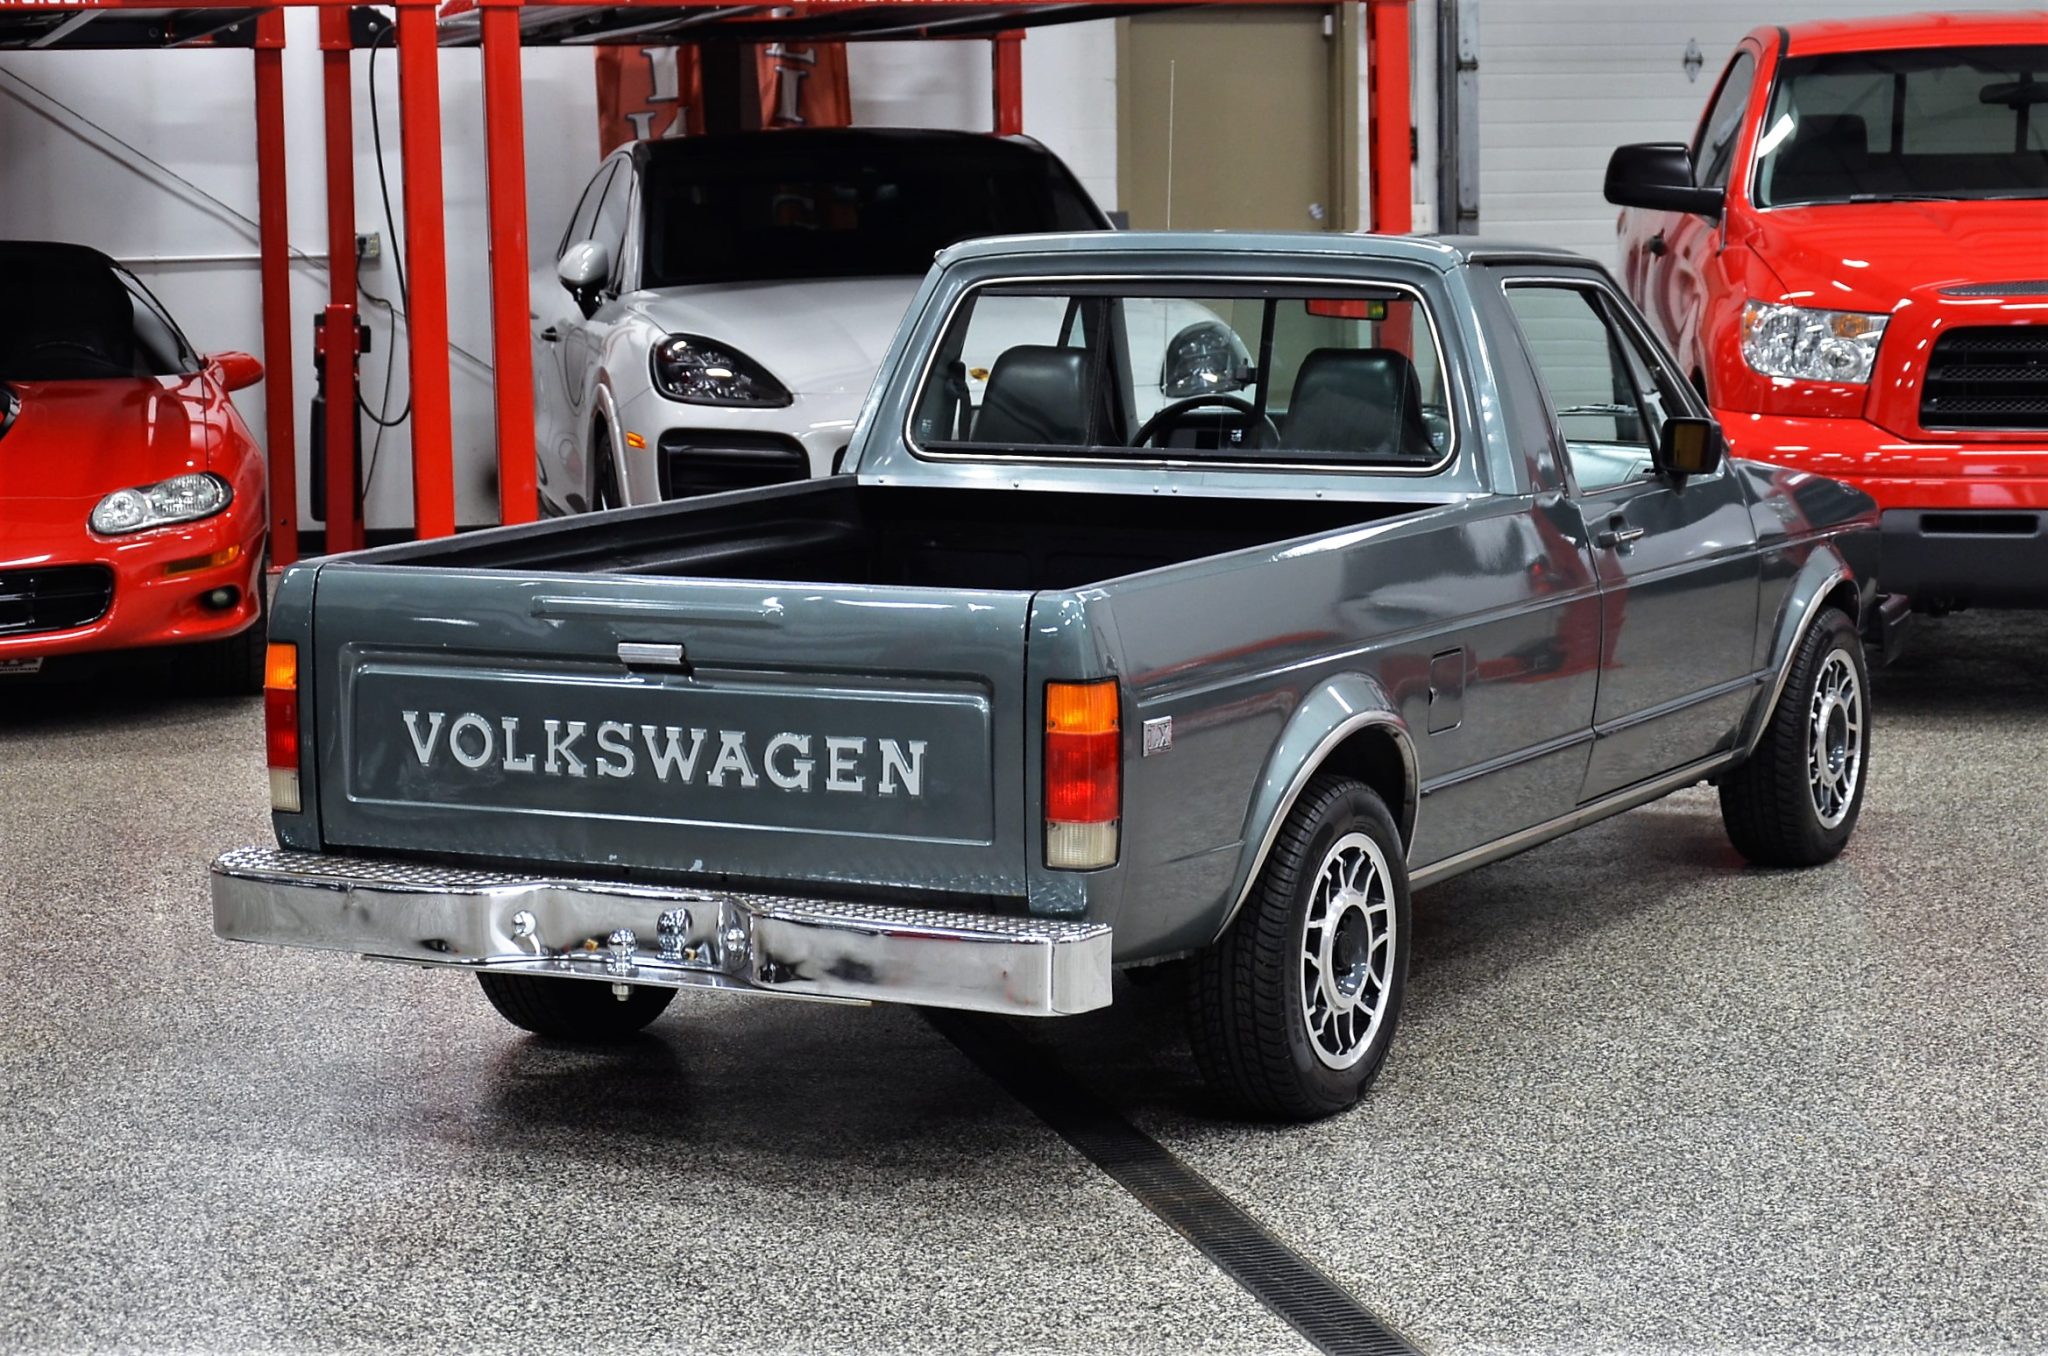 Pickup Volkswagen Rabbit ano 1982 / Foto reprodução / Bring a Trailer